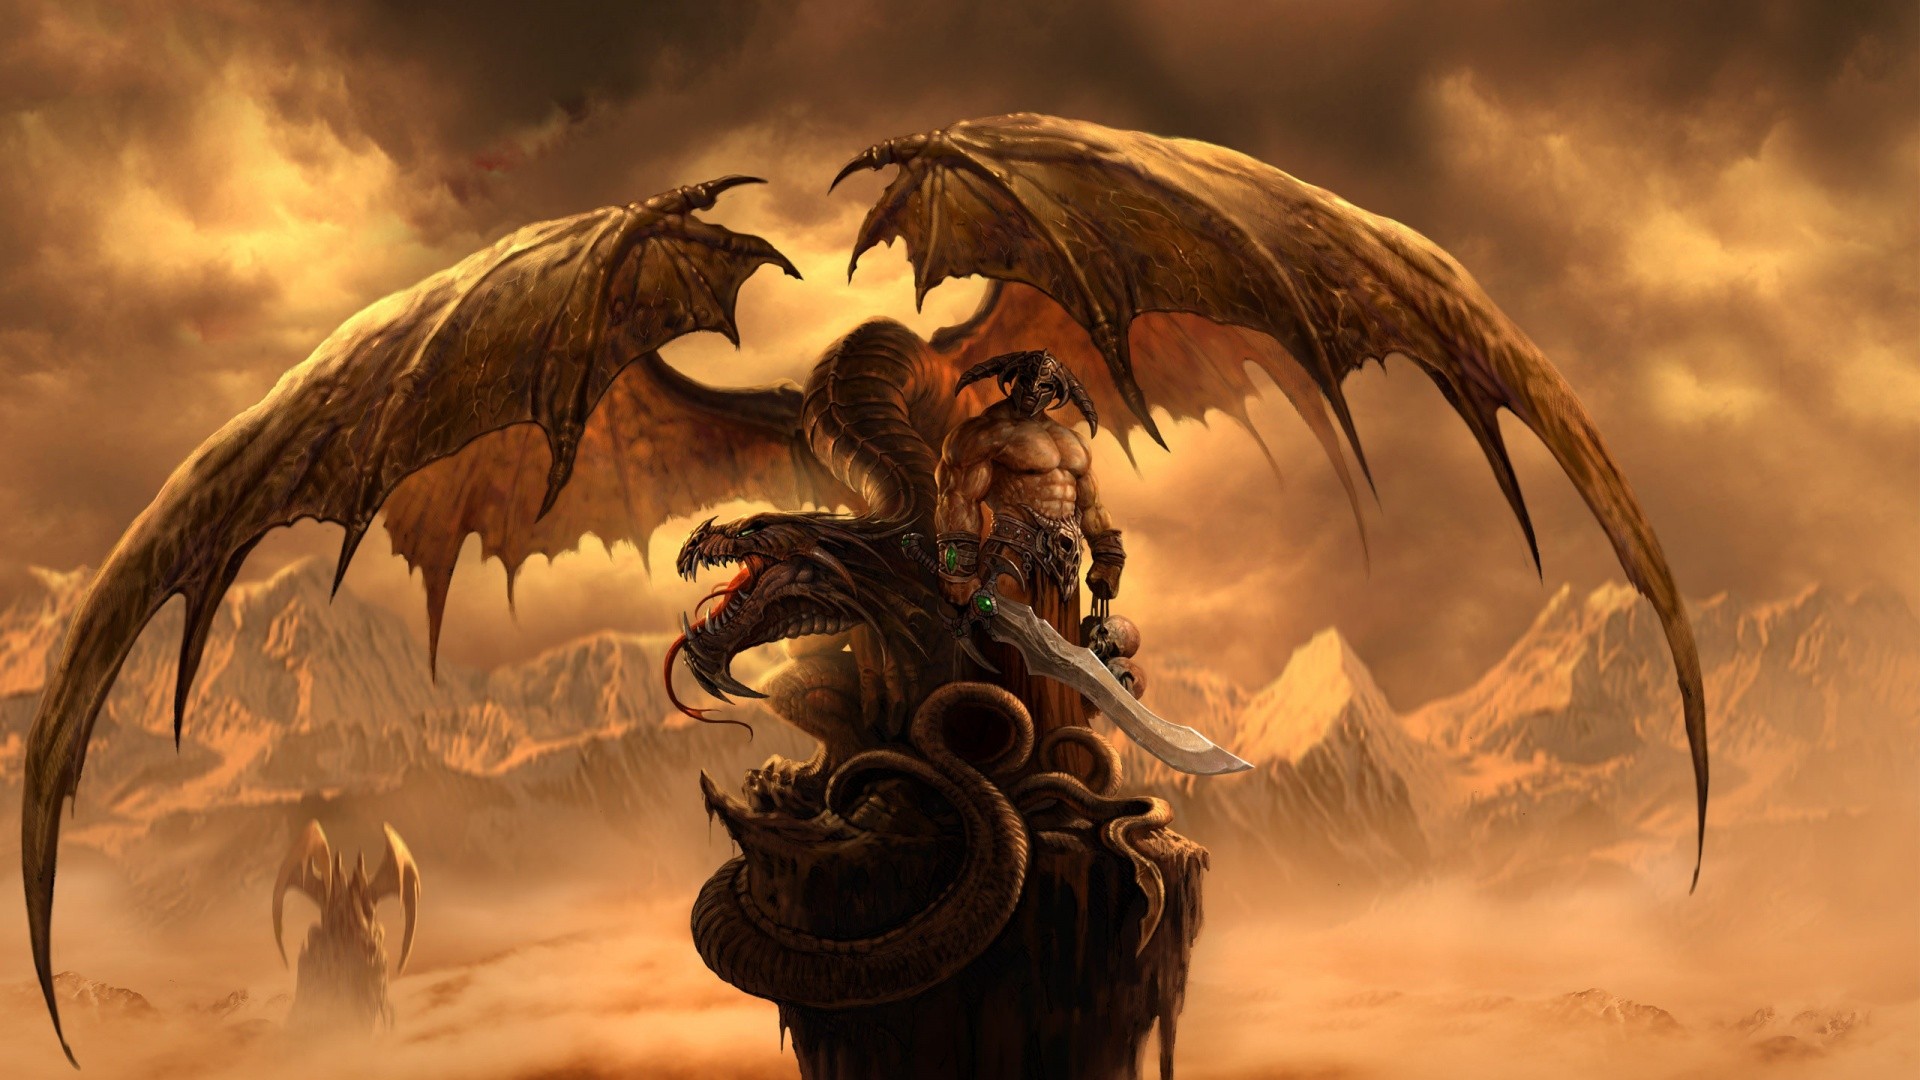 best dragon wallpaper,dragon,cg artwork,fictional character,sky,mythical creature